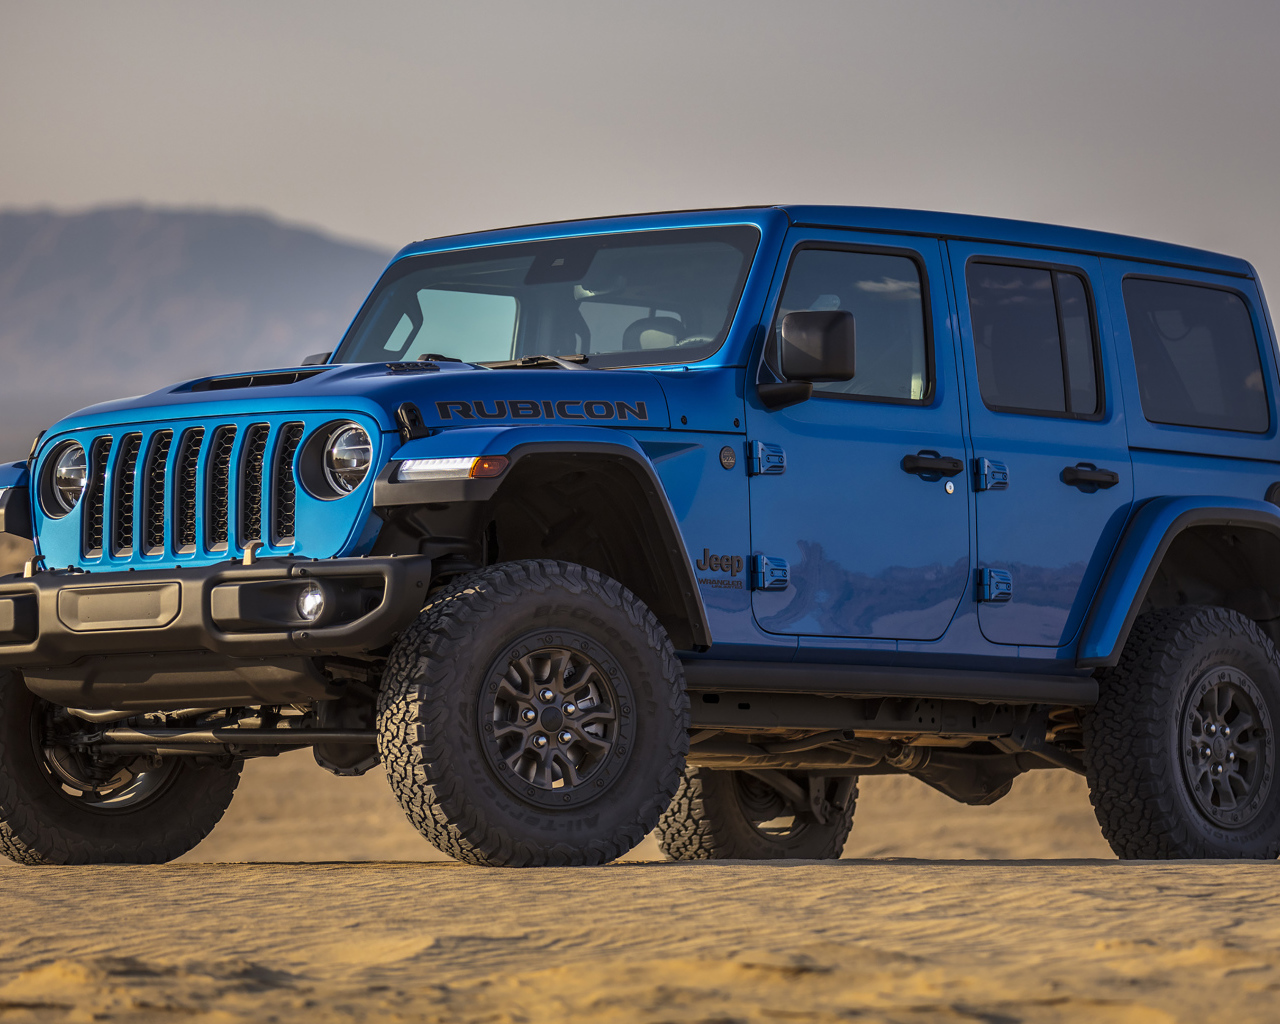 Синий Jeep Wrangler Unlimited Rubicon 392, 2021 года в пустыне